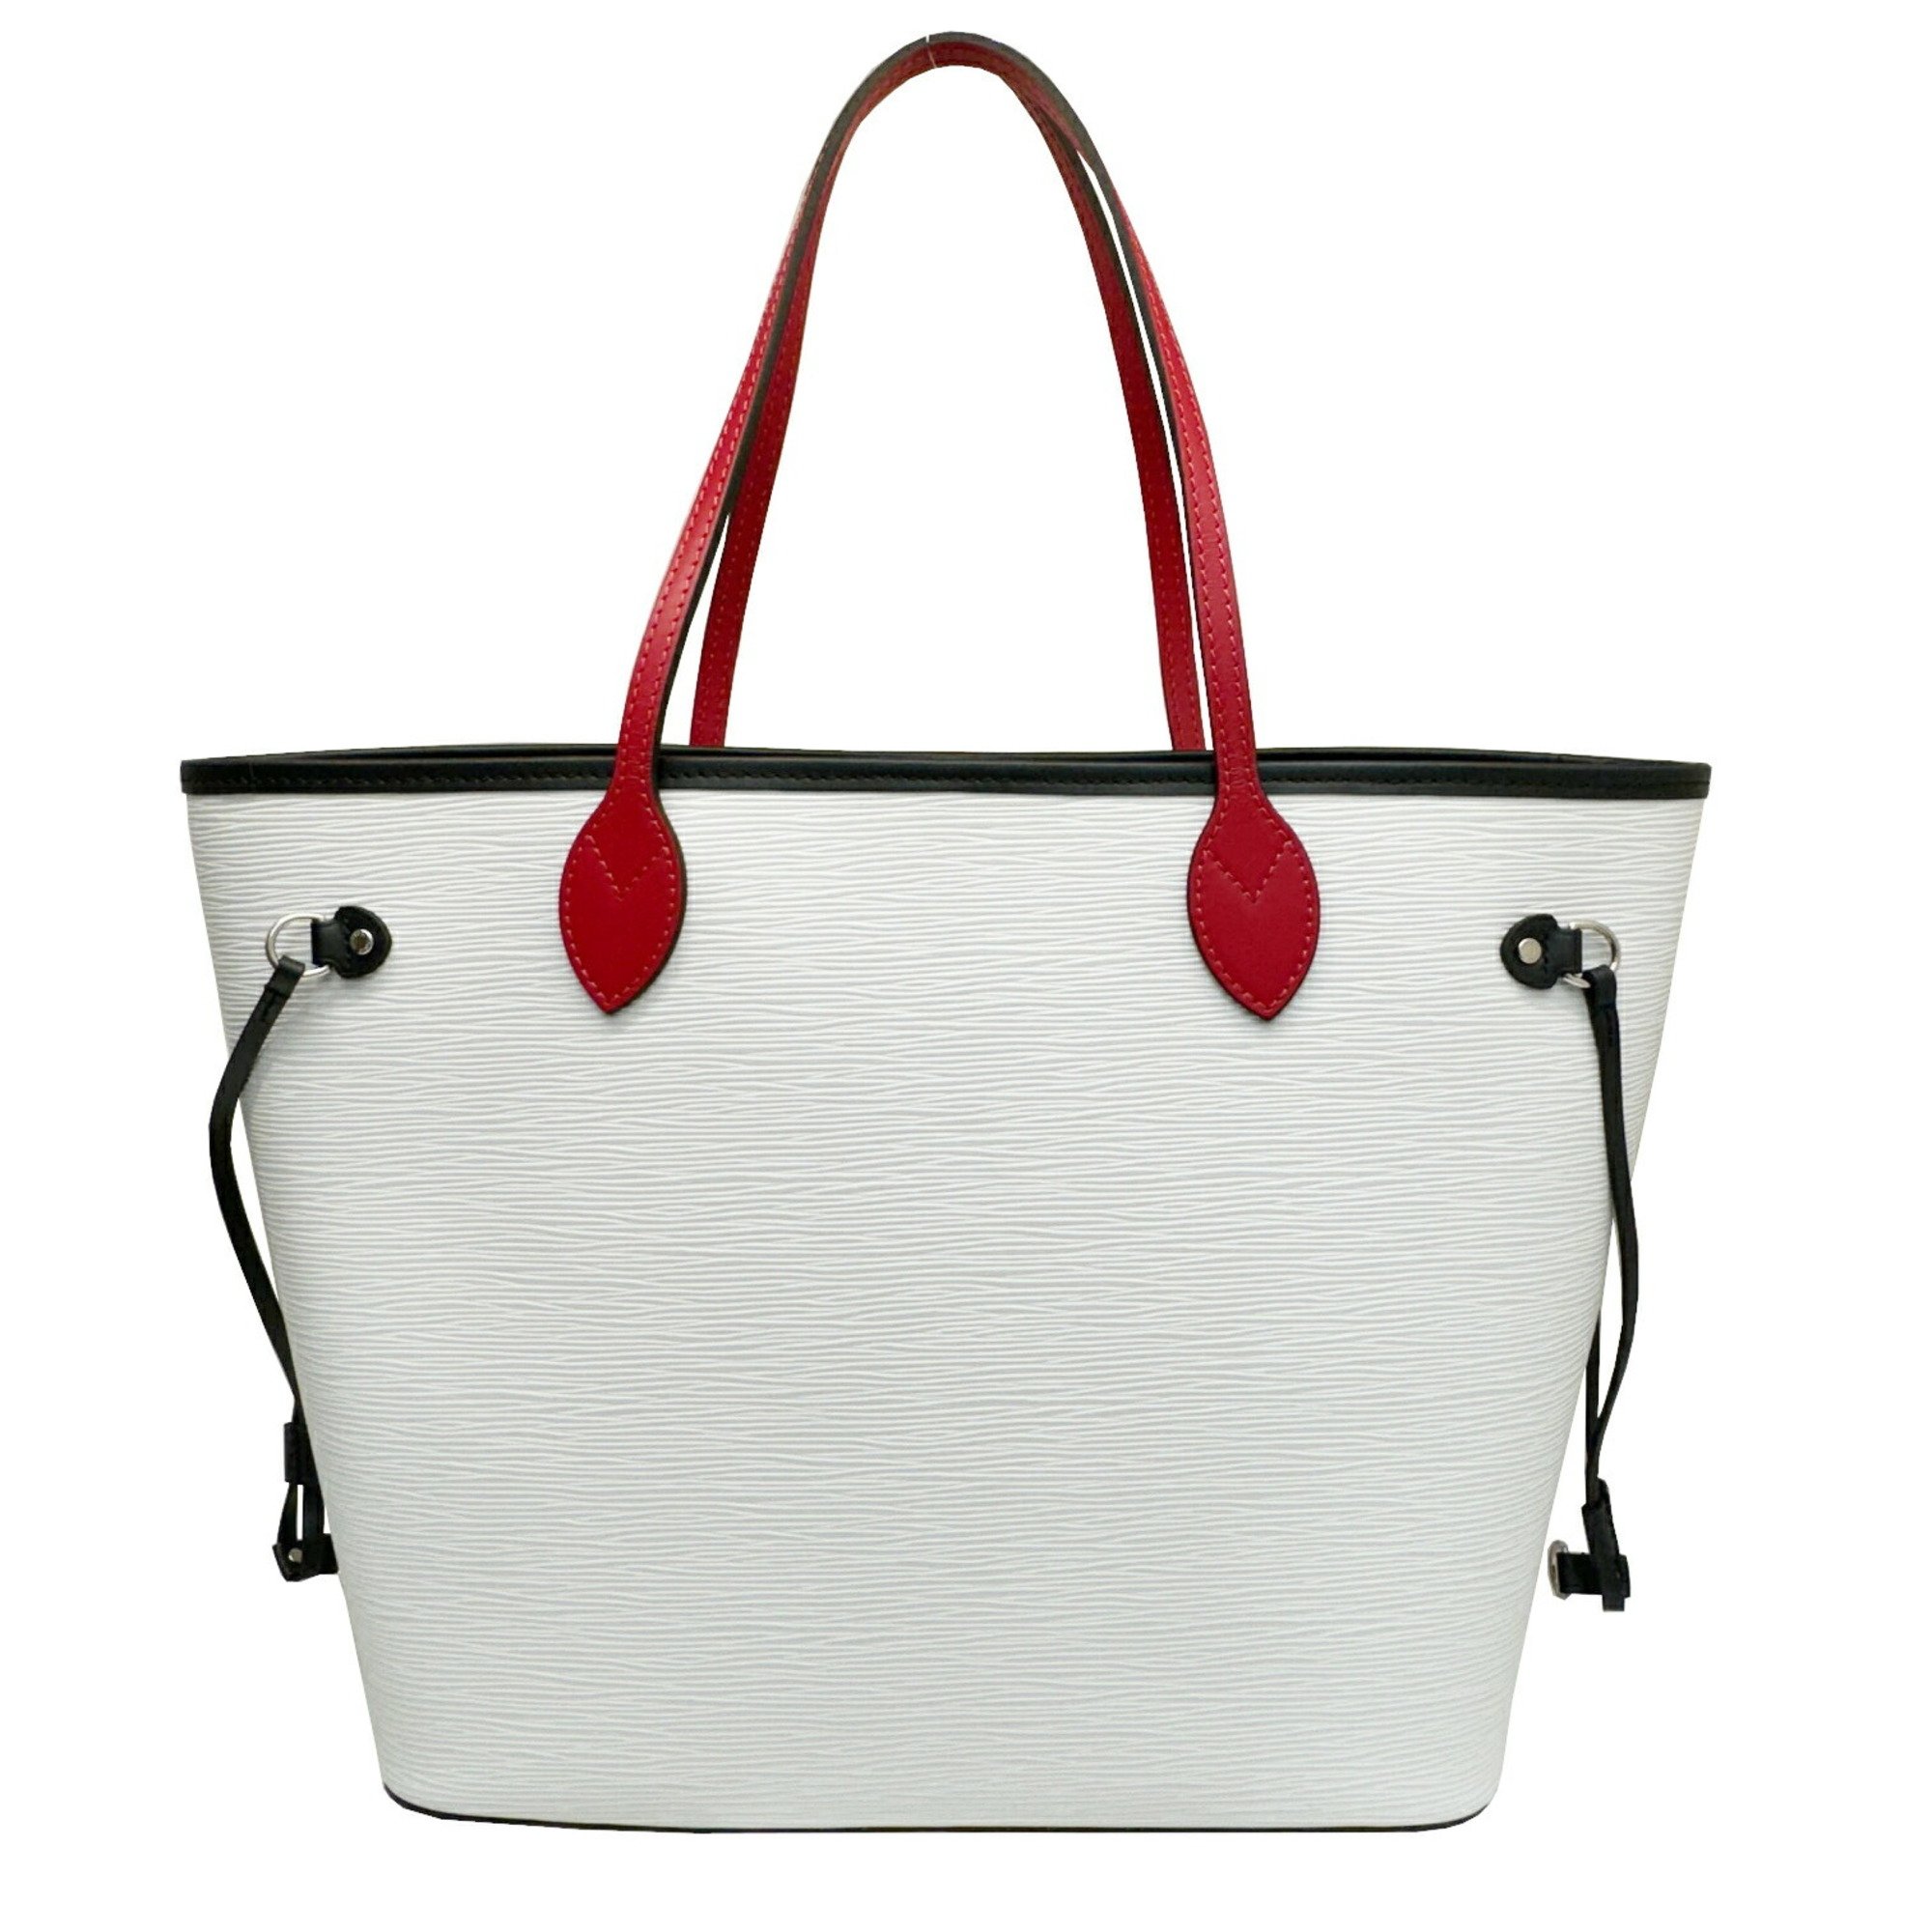 LOUIS VUITTON Neverfull MM M55591 UB0250 Tote Bag Shoulder Epi Leather Blond Optique White Red Black Ladies